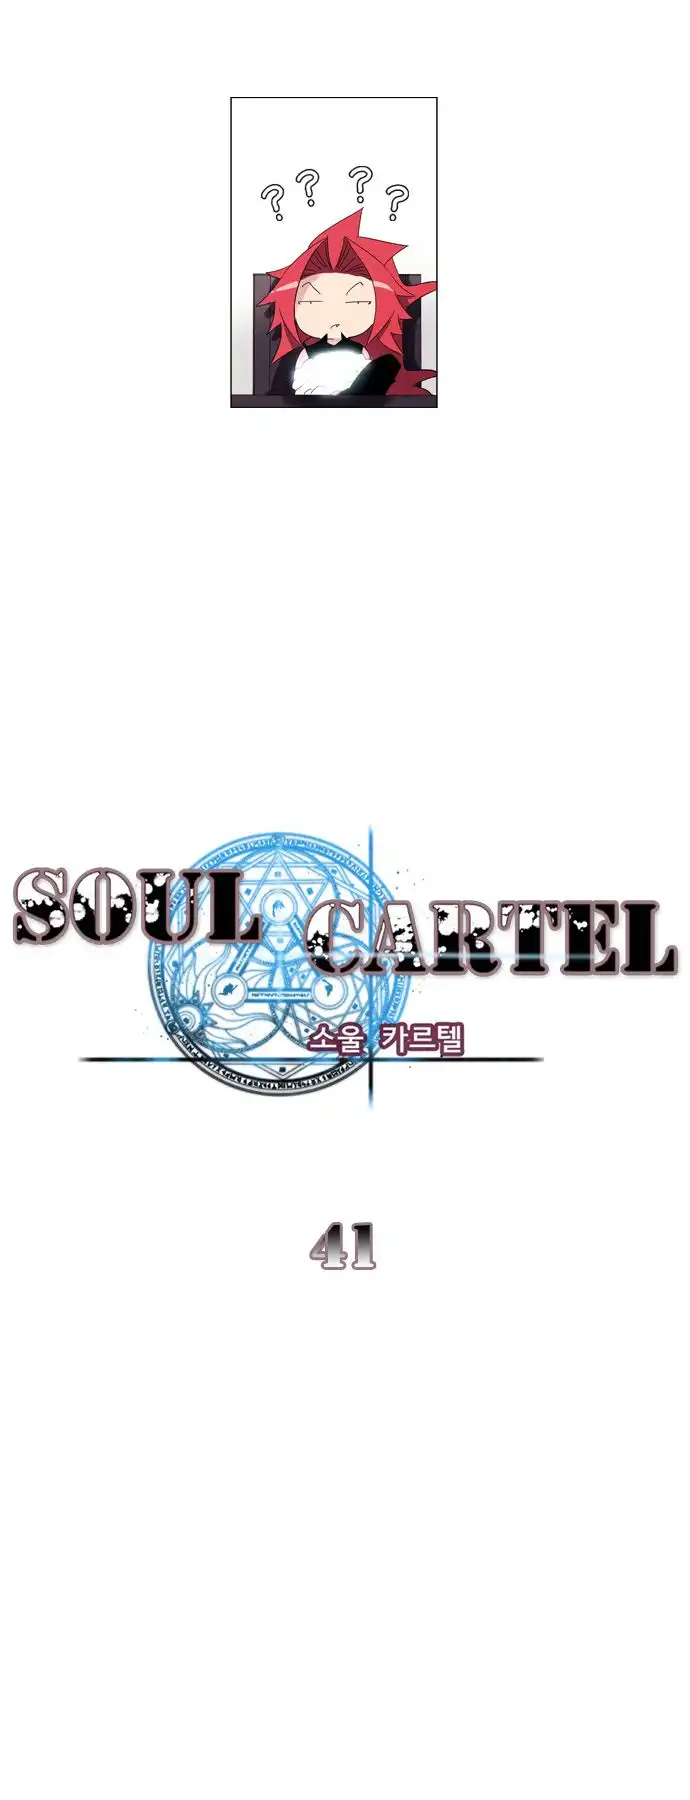 Soul Cartel Chapter 41